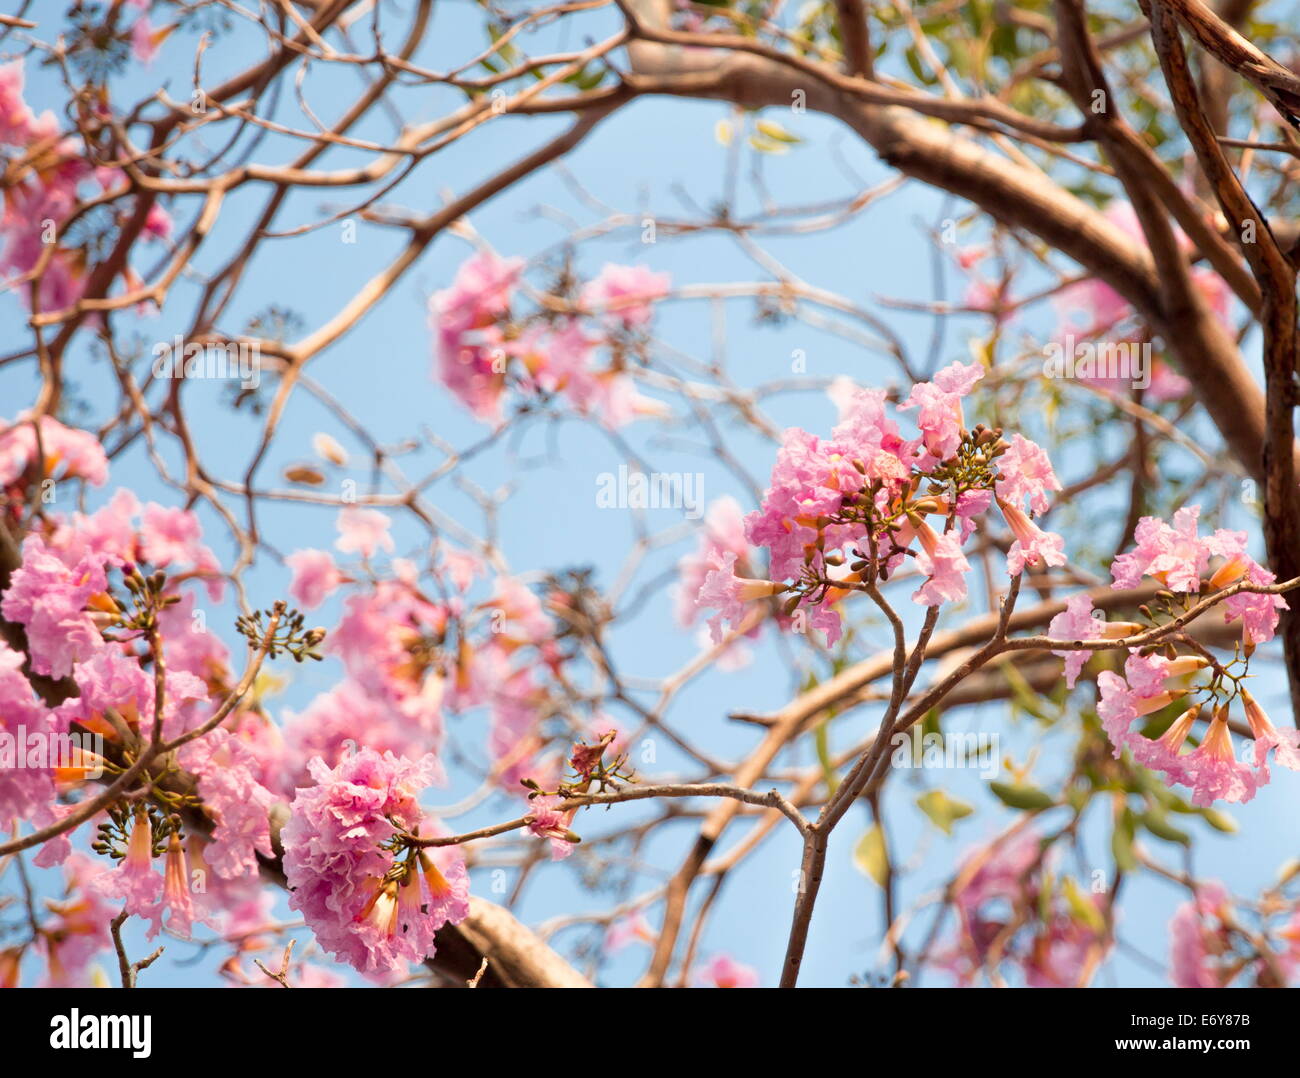 Pink flower Stock Photo